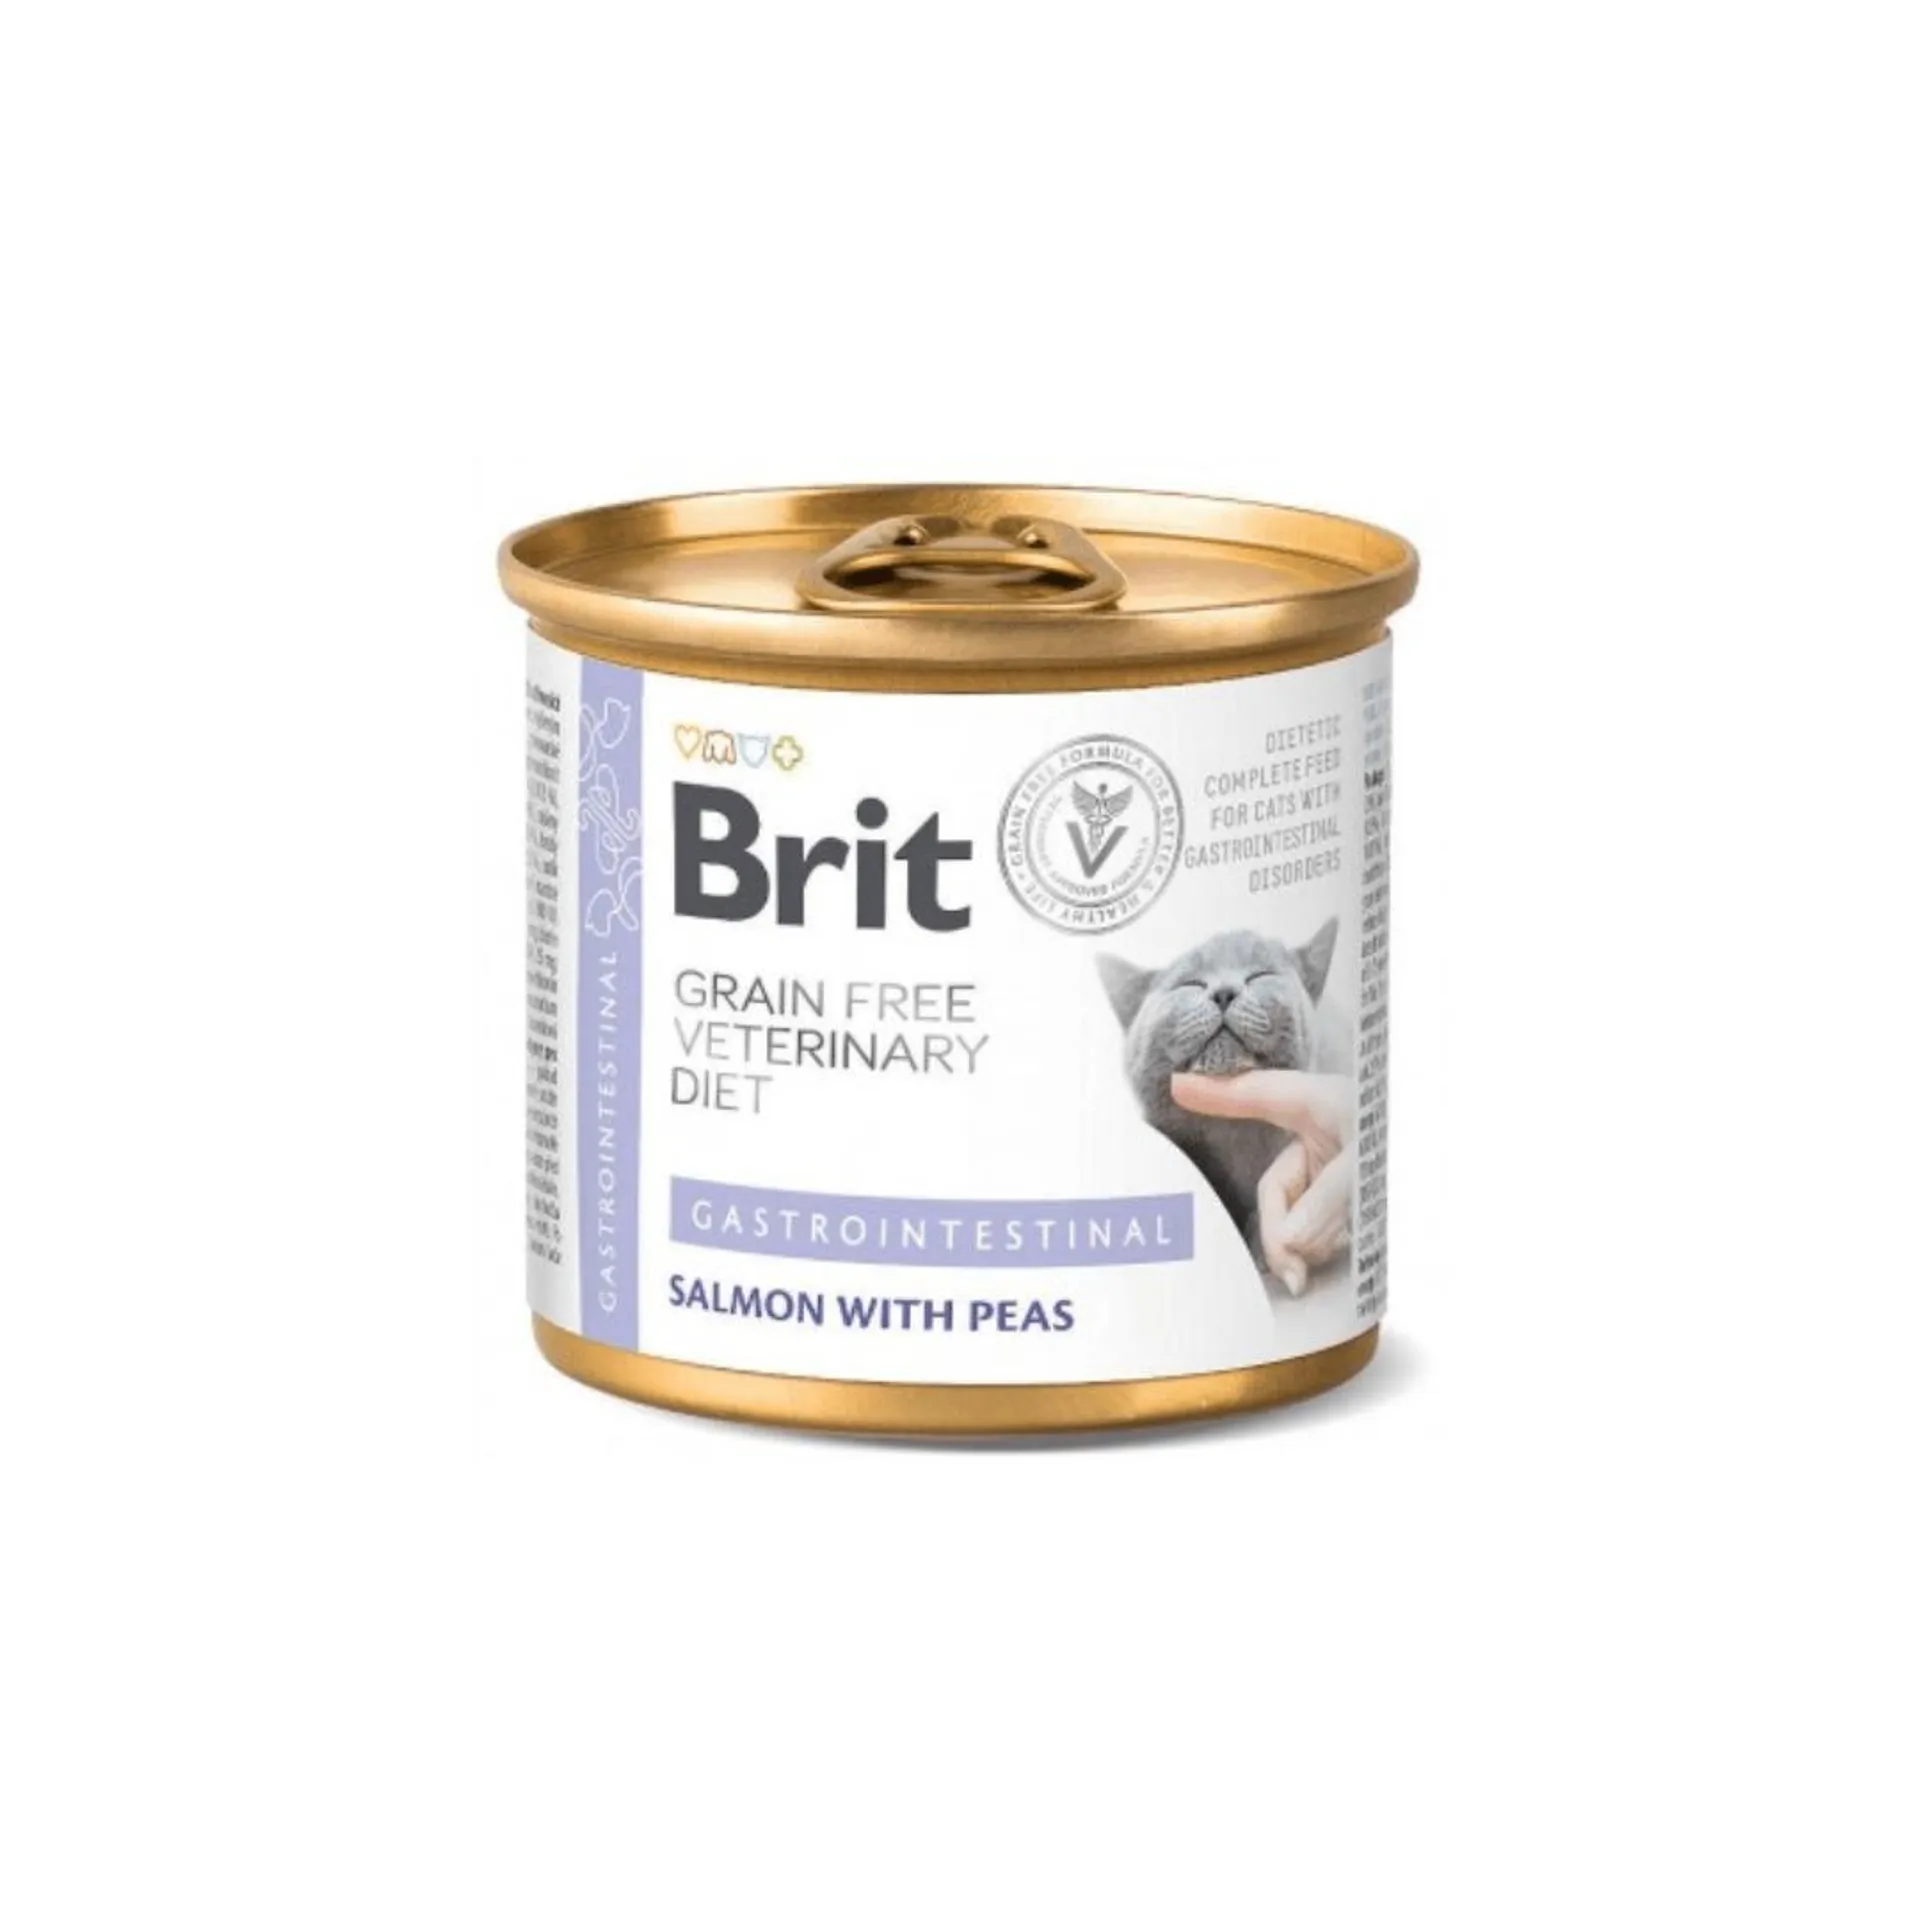 Brit Sin Cereales Dieta Veterinaria Gato Gastrointestinal Pack Ahorro